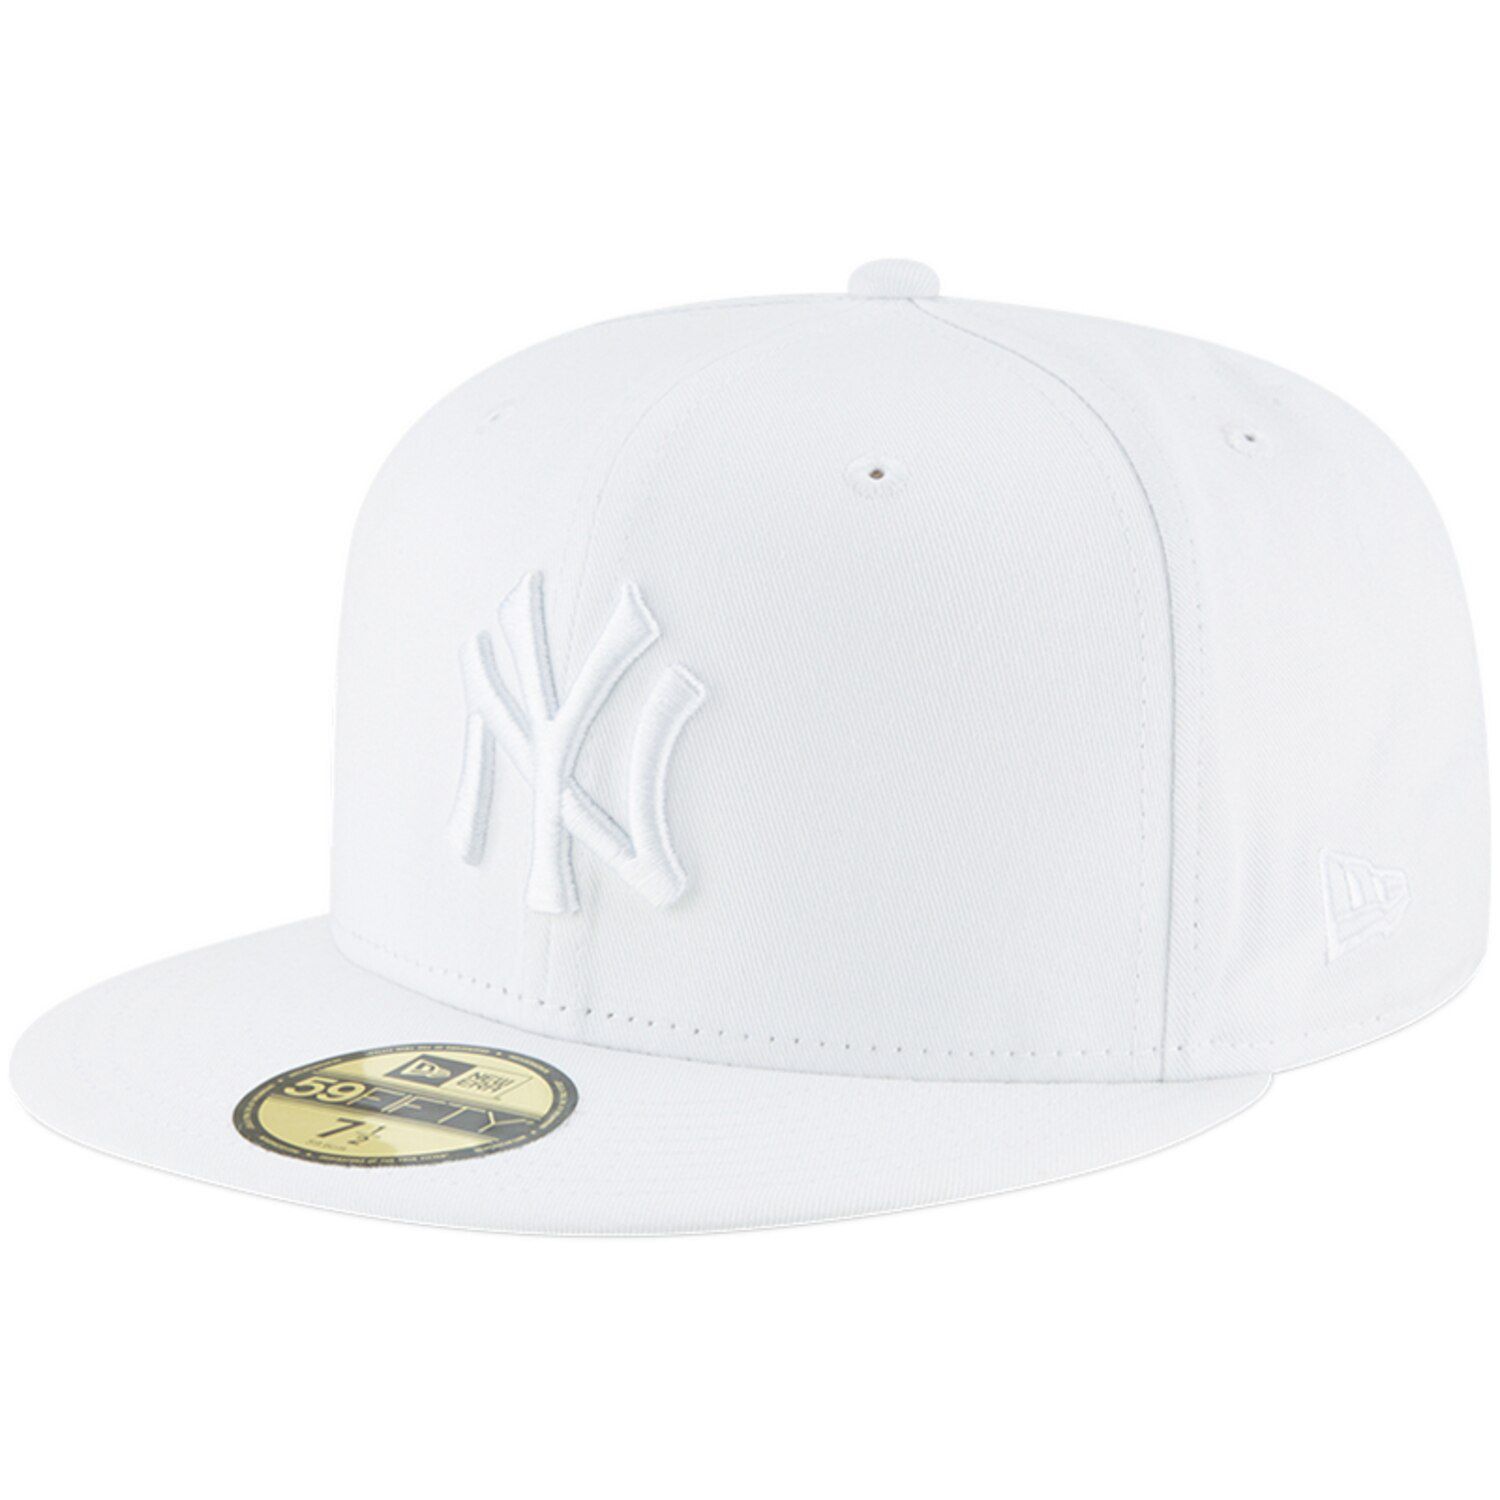 white ny yankees cap